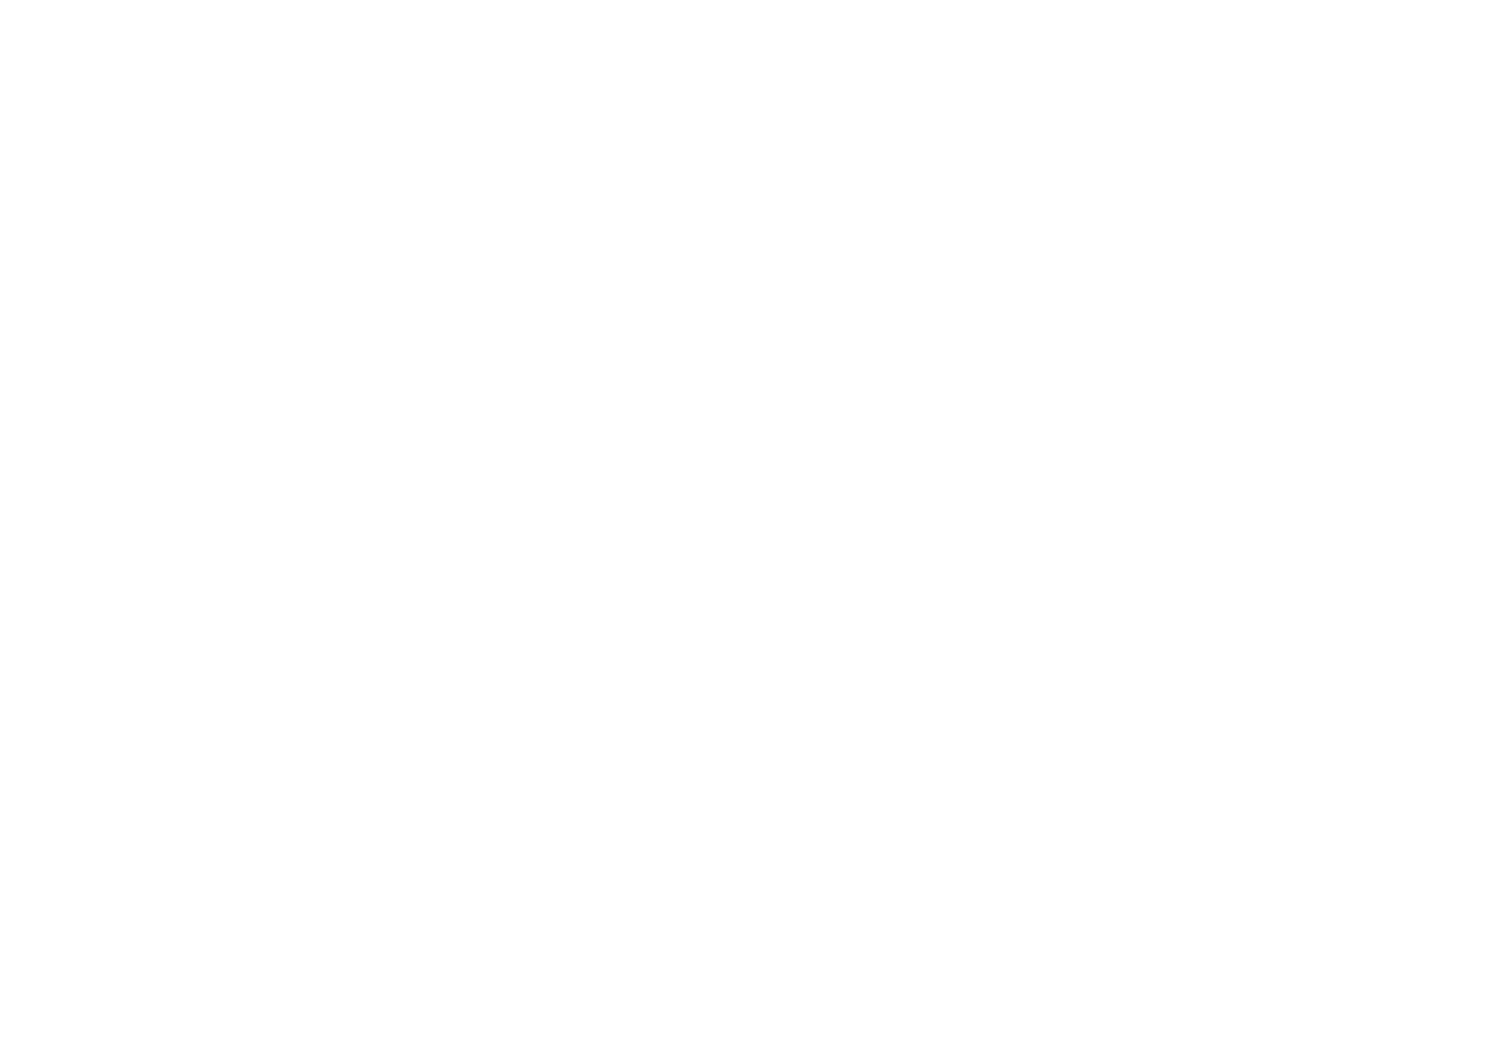 New Wine International Church